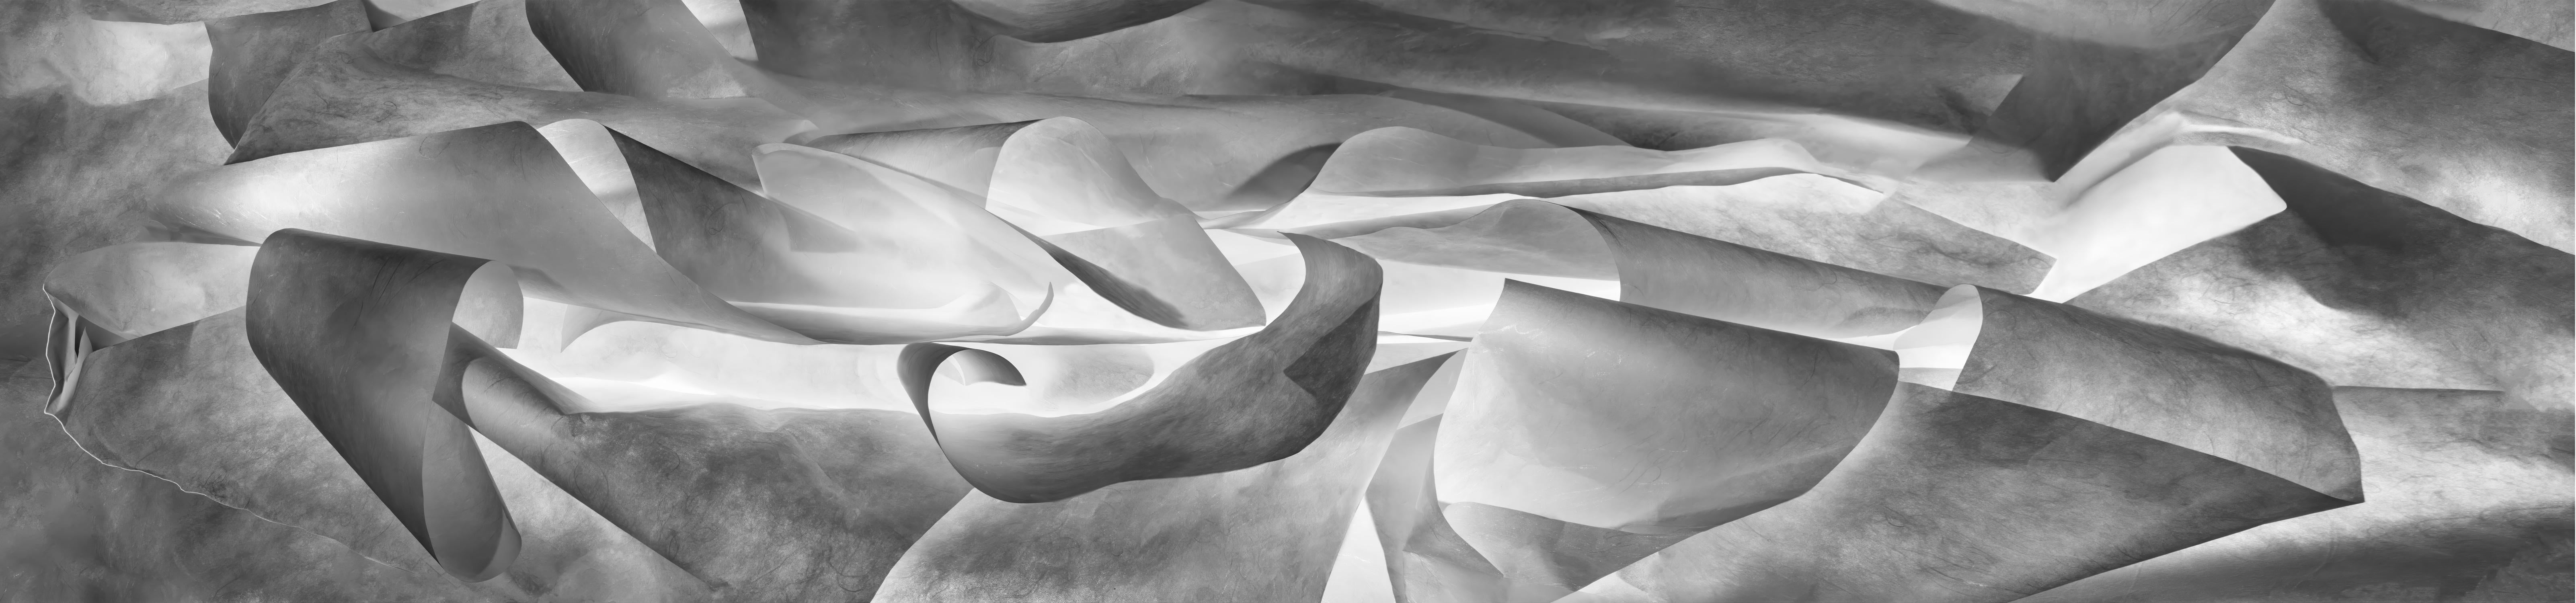 John Dean Abstract Photograph - 'Undercurrents (11/14/21)' - abstract photography - black and white photograph